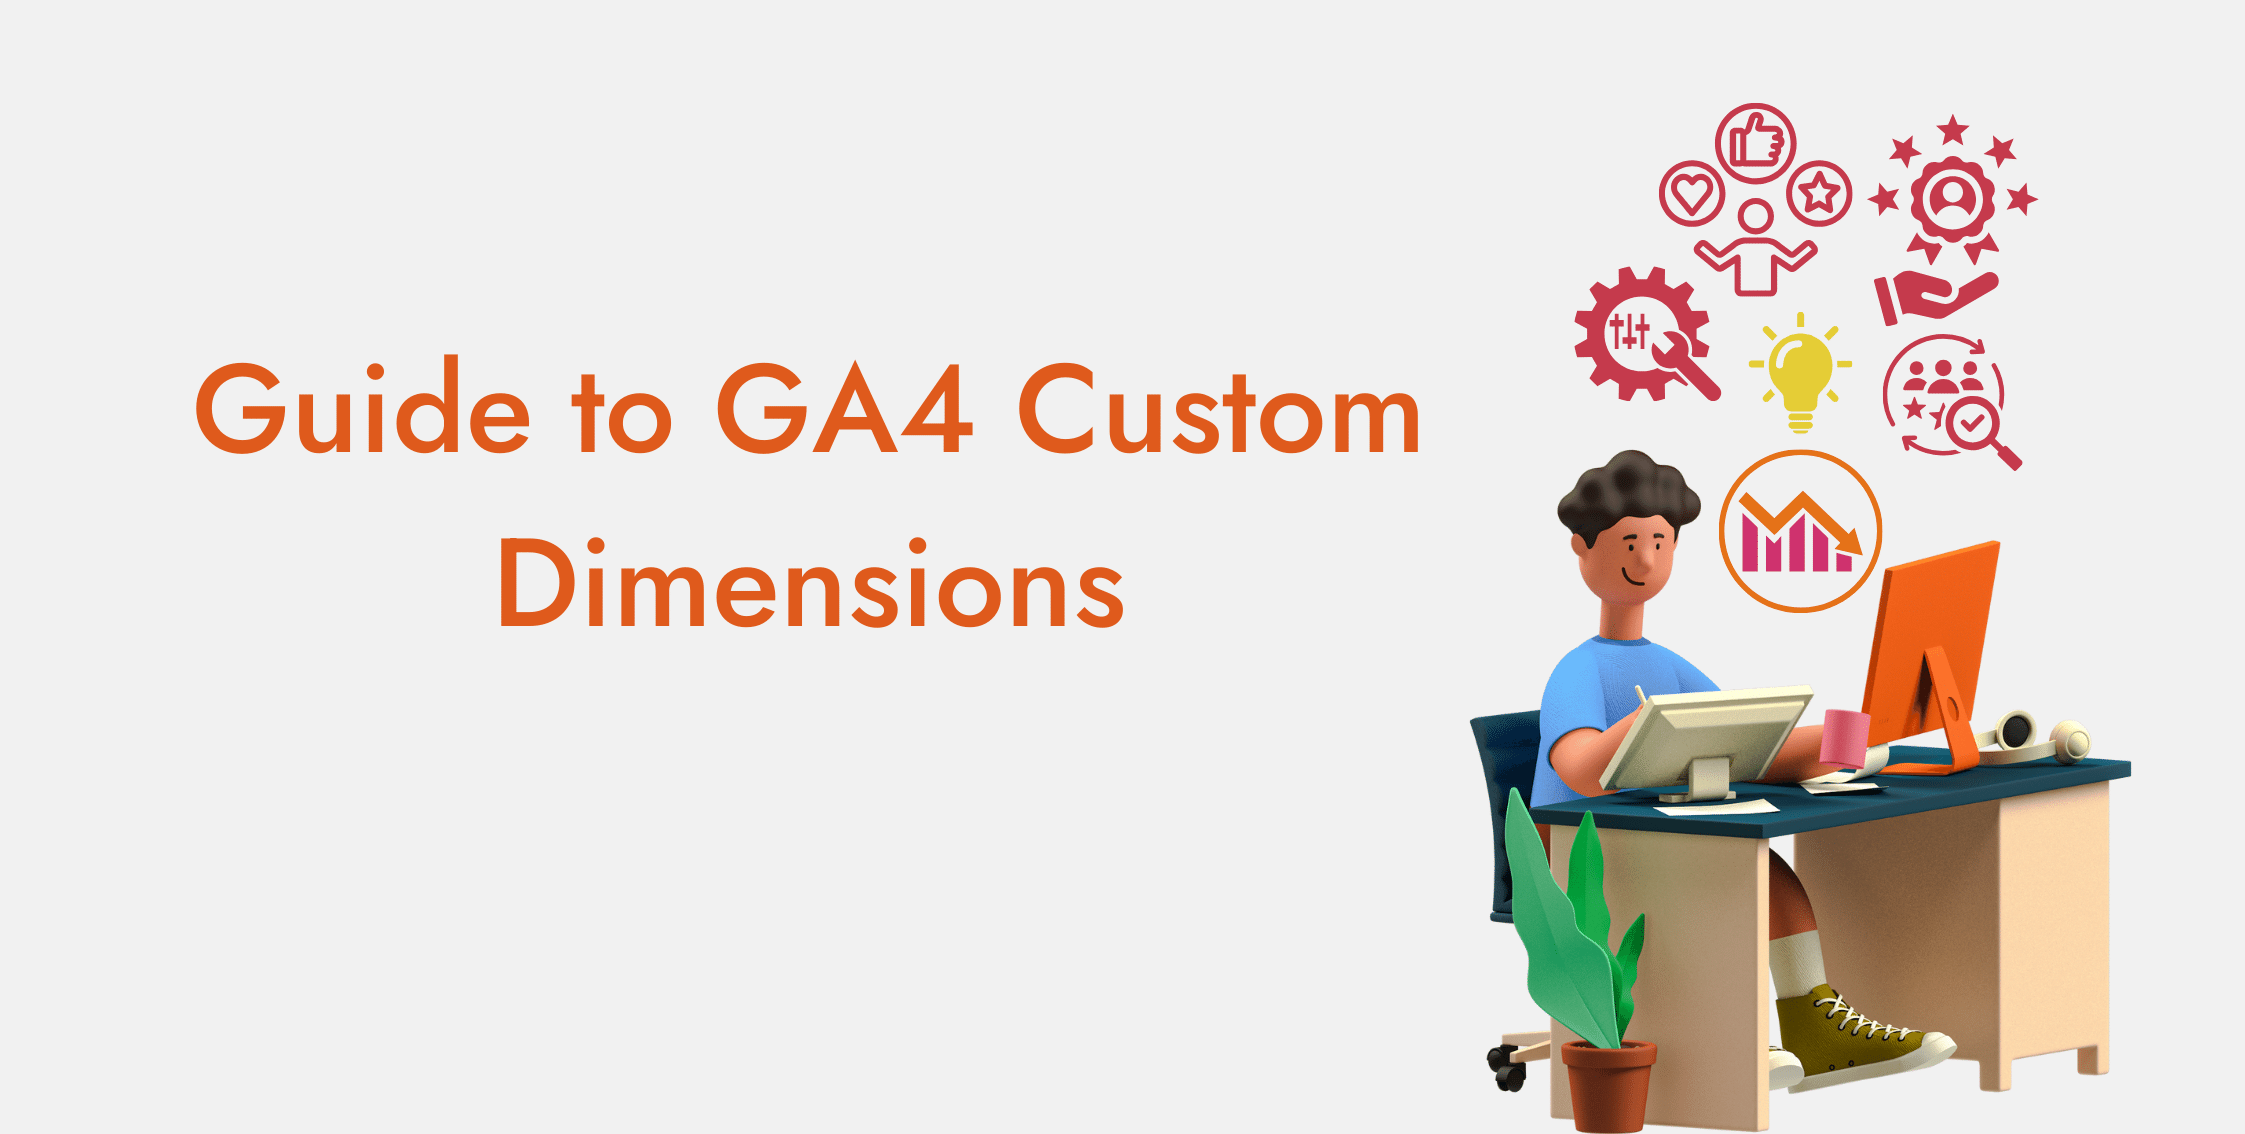 Guide to Google Analytics 4 (GA4) Custom Dimensions